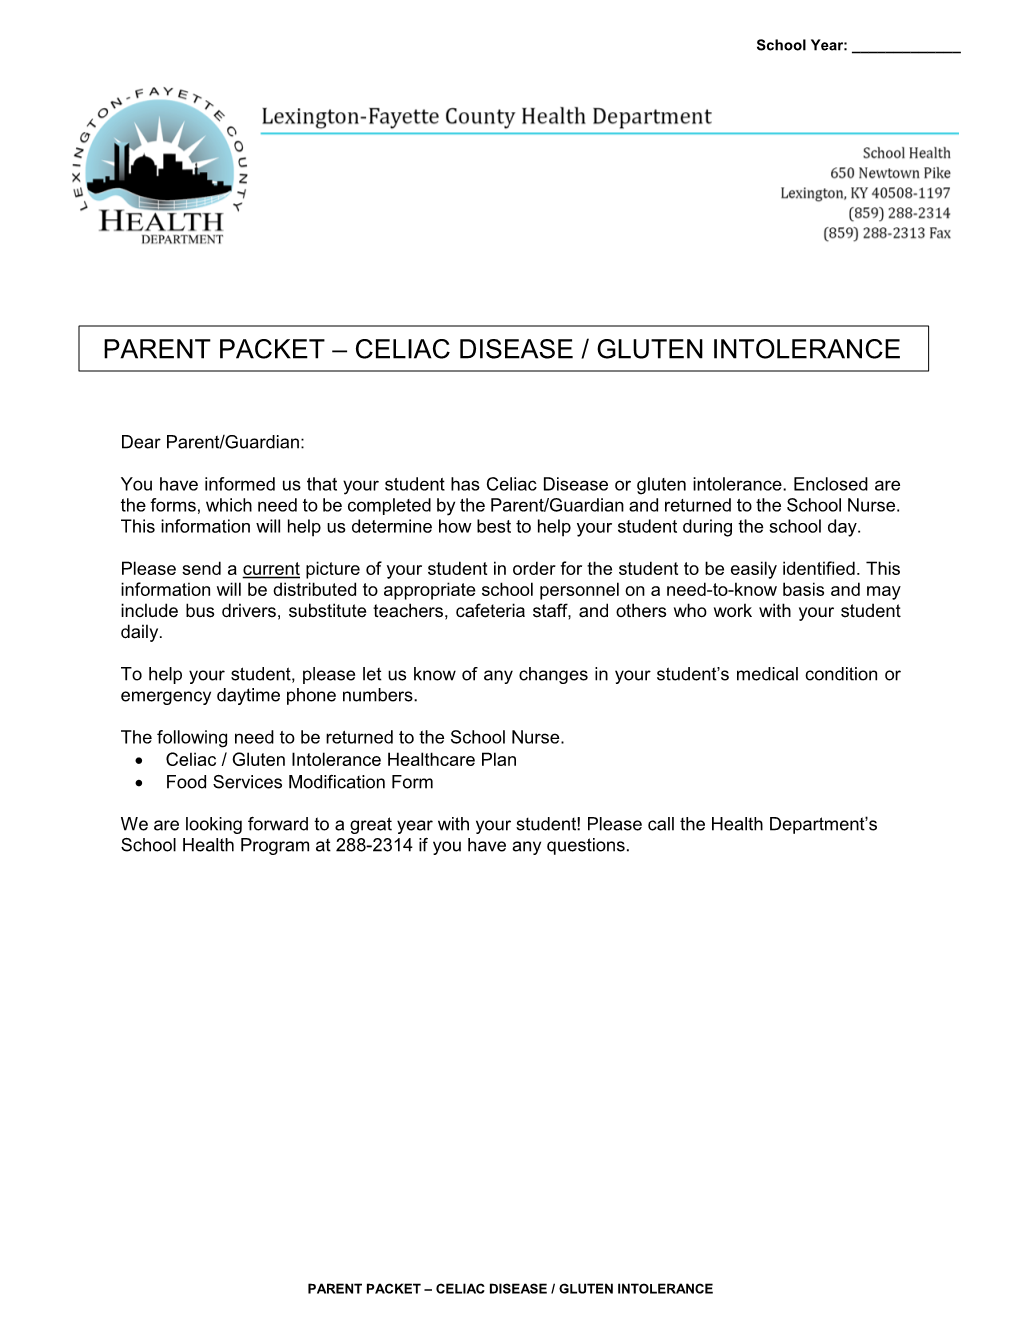 Celiac Disease / Gluten Intolerance